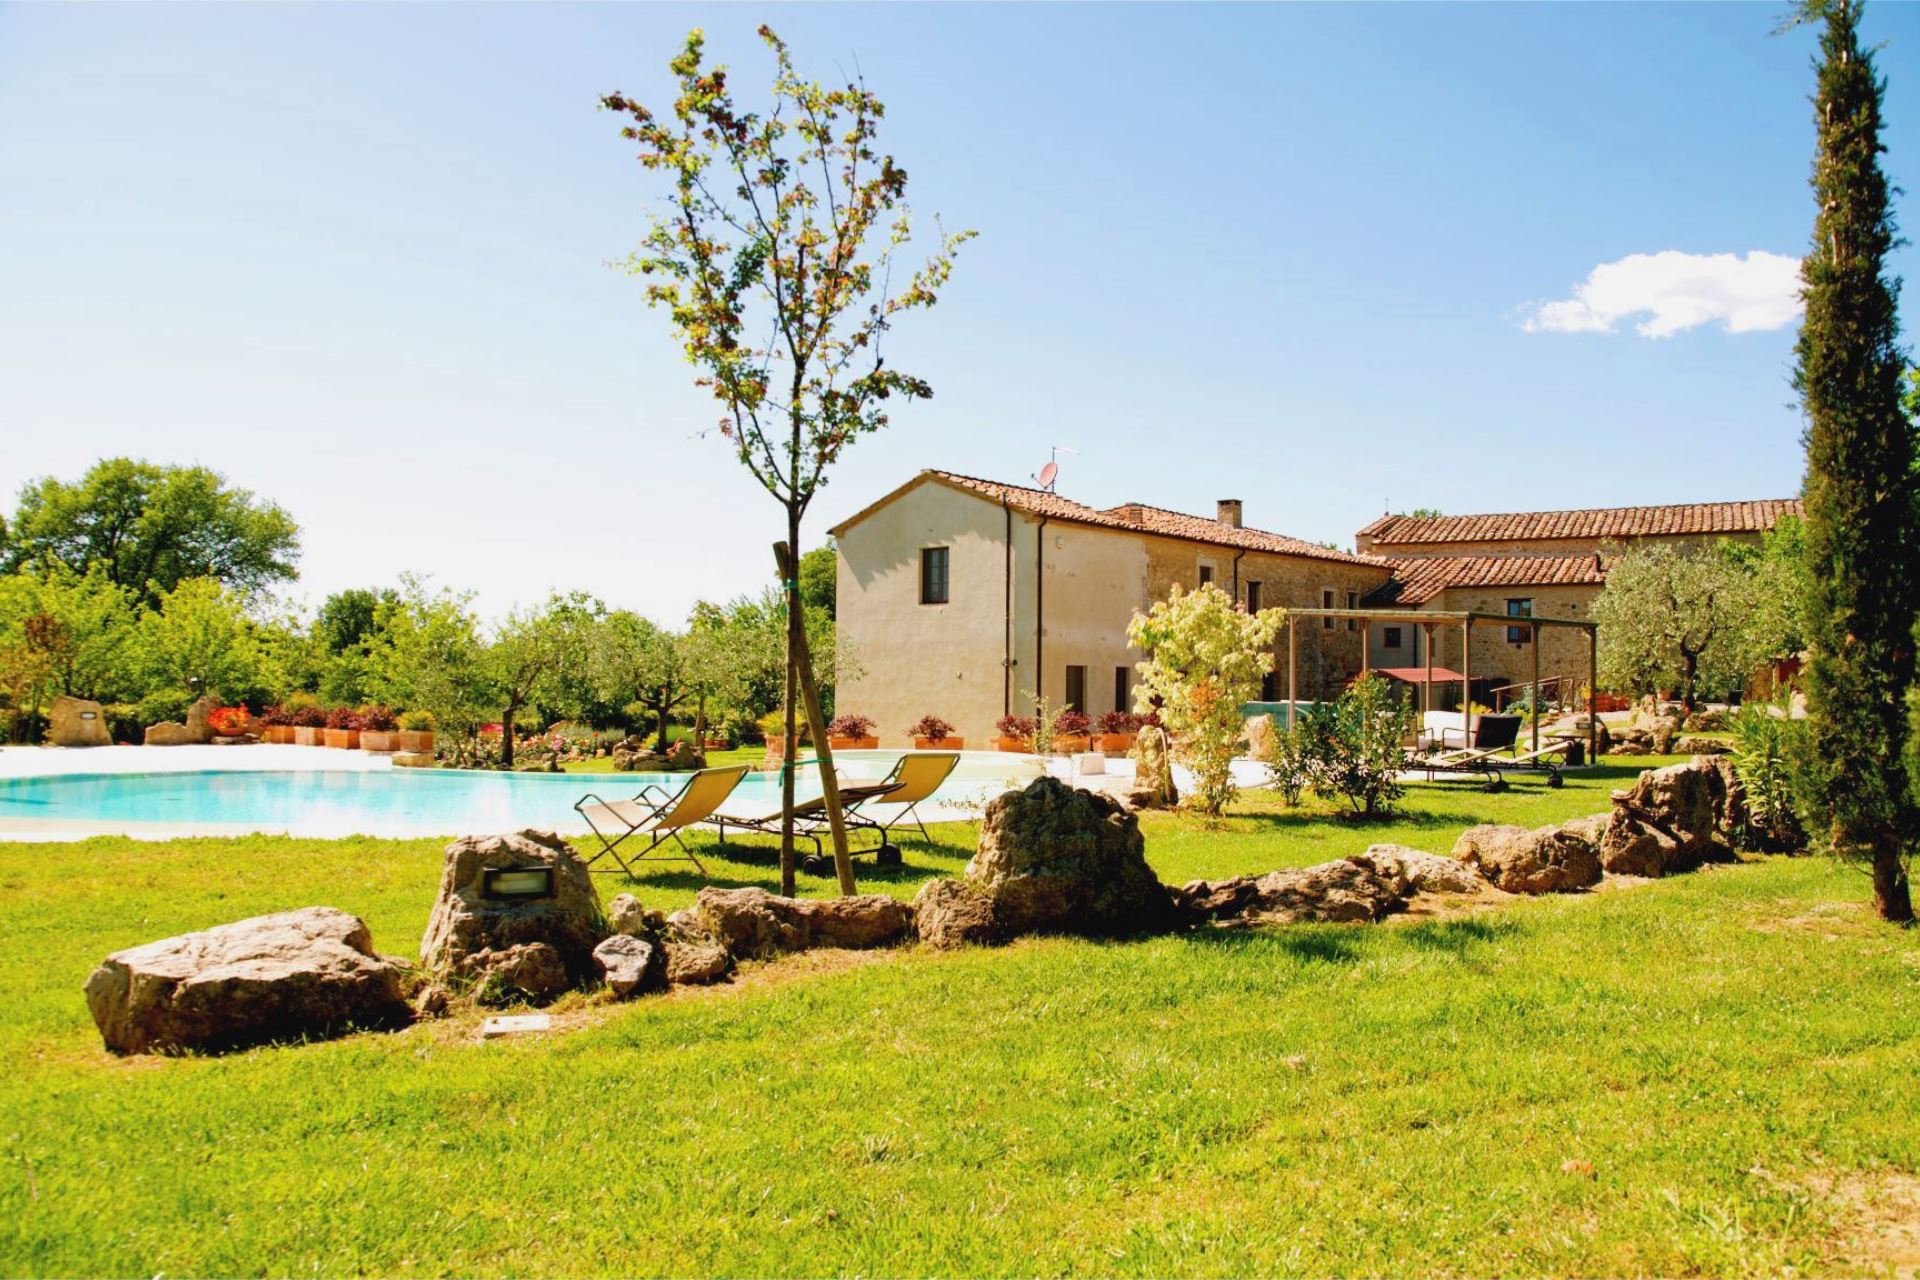 421_75c392f_Agriturimso, vakantiehuis met privé zwembad, Toscane, Asciano, Val D'Orcia (23)